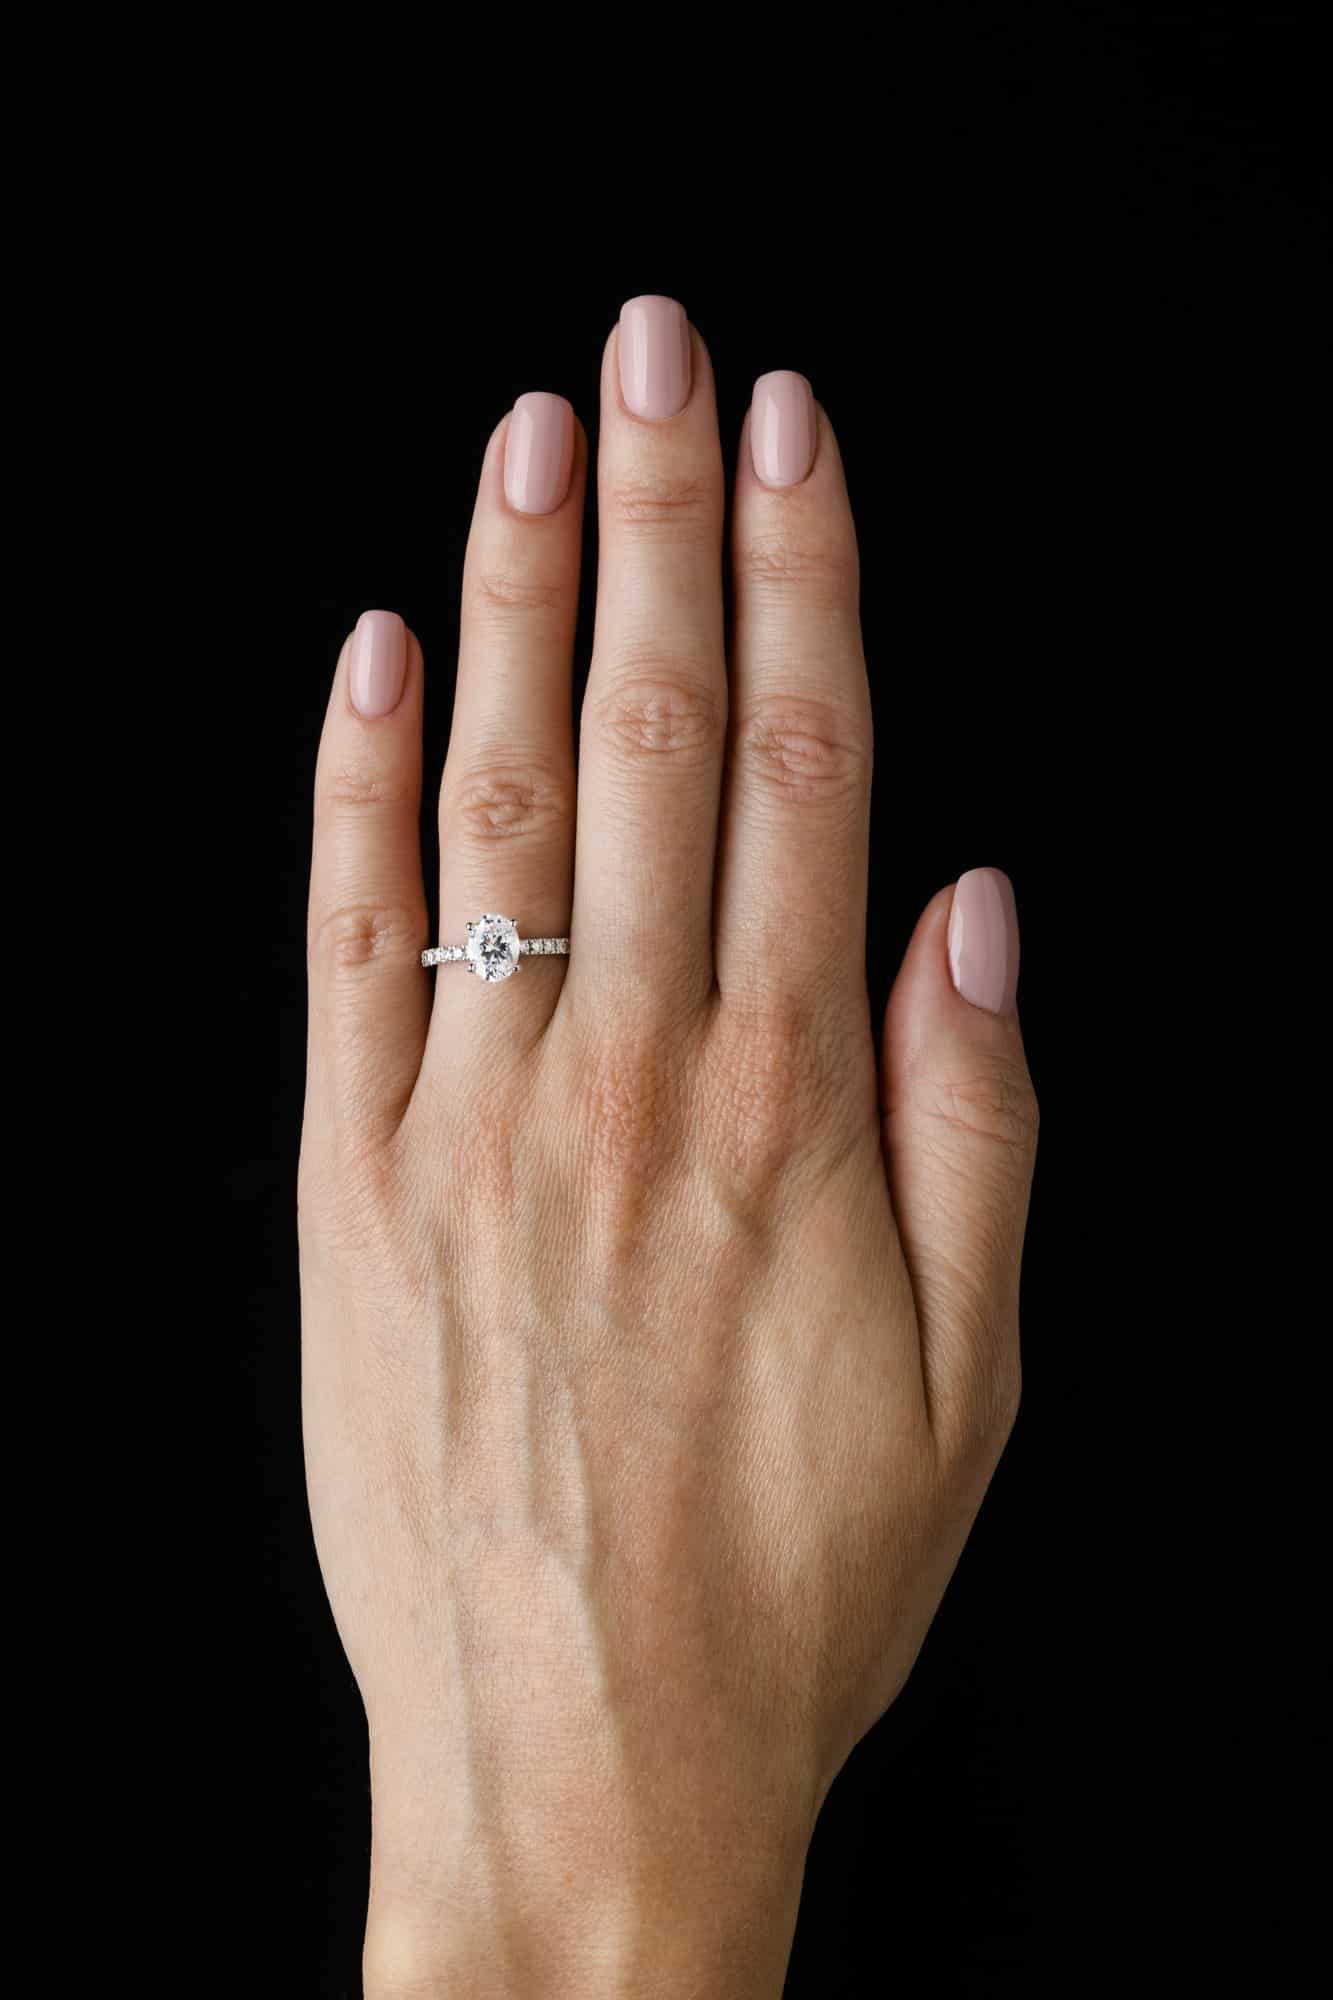 Starlight diamond ring on hand